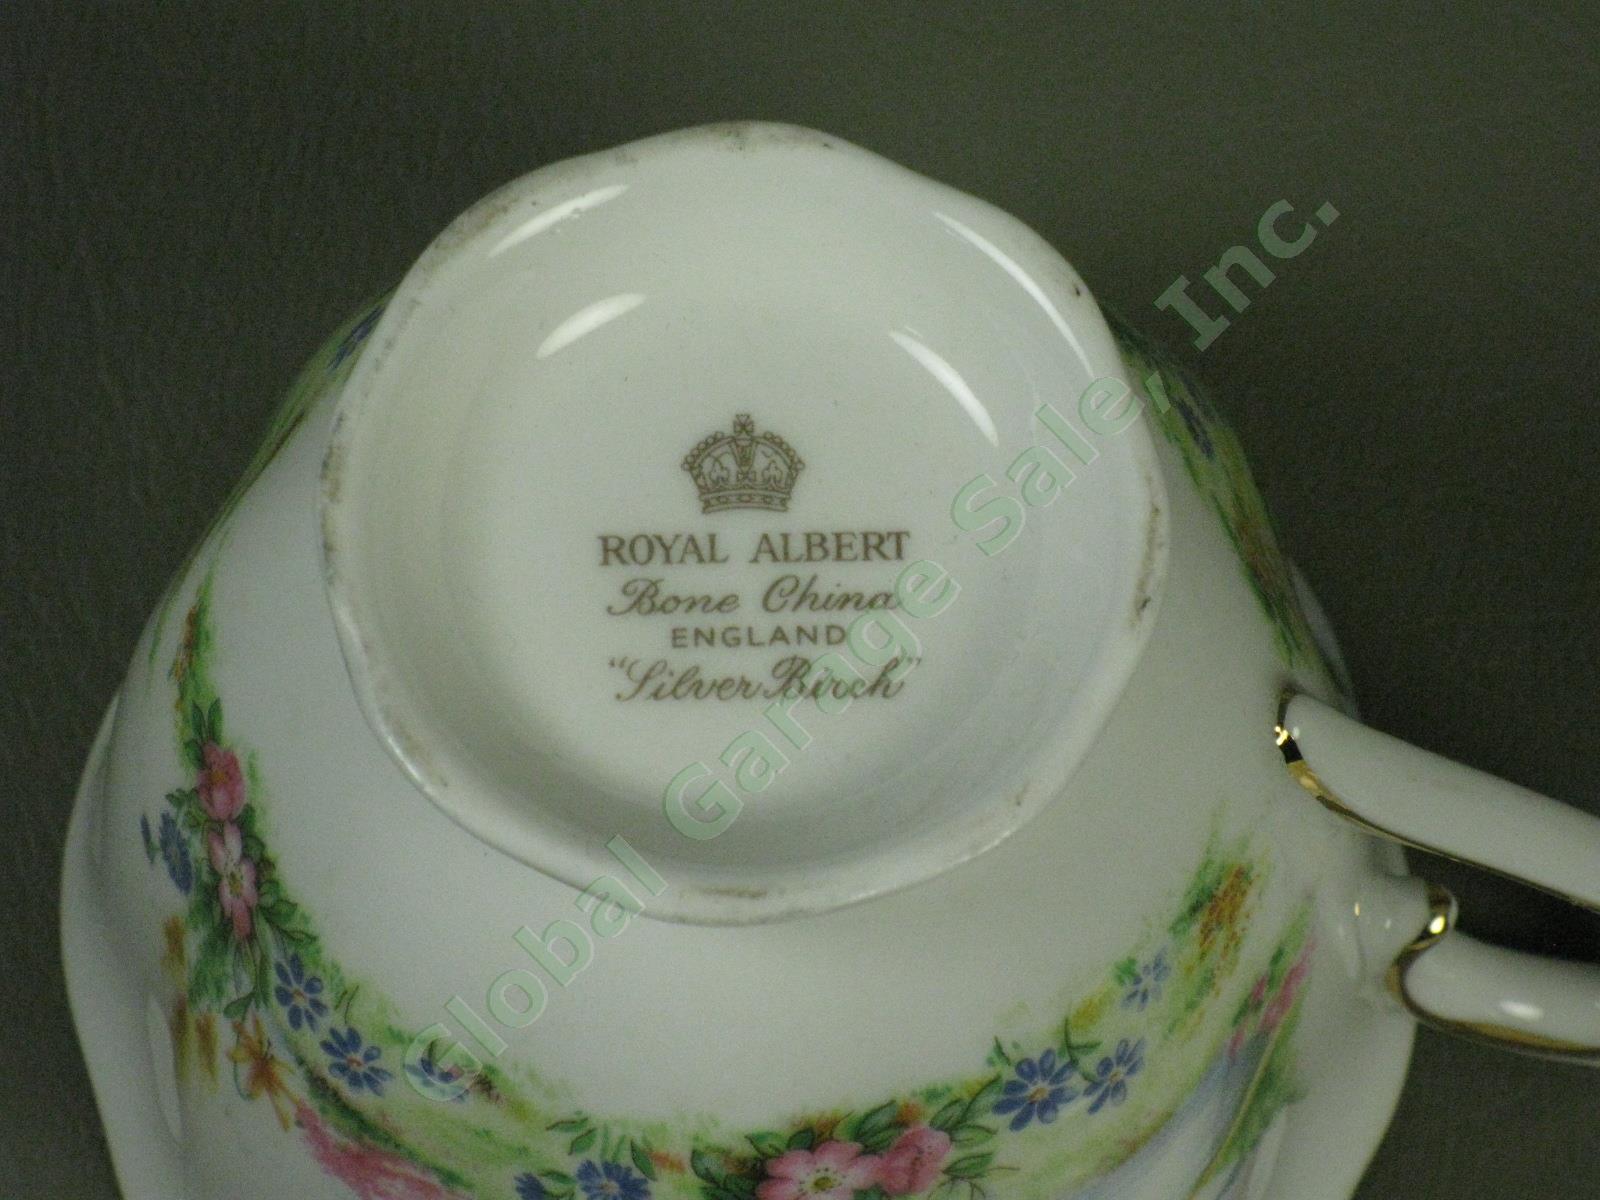 8 Vintage Royal Albert Silver Birch Bone China Teacups Tea Cups + Saucers Set NR 8